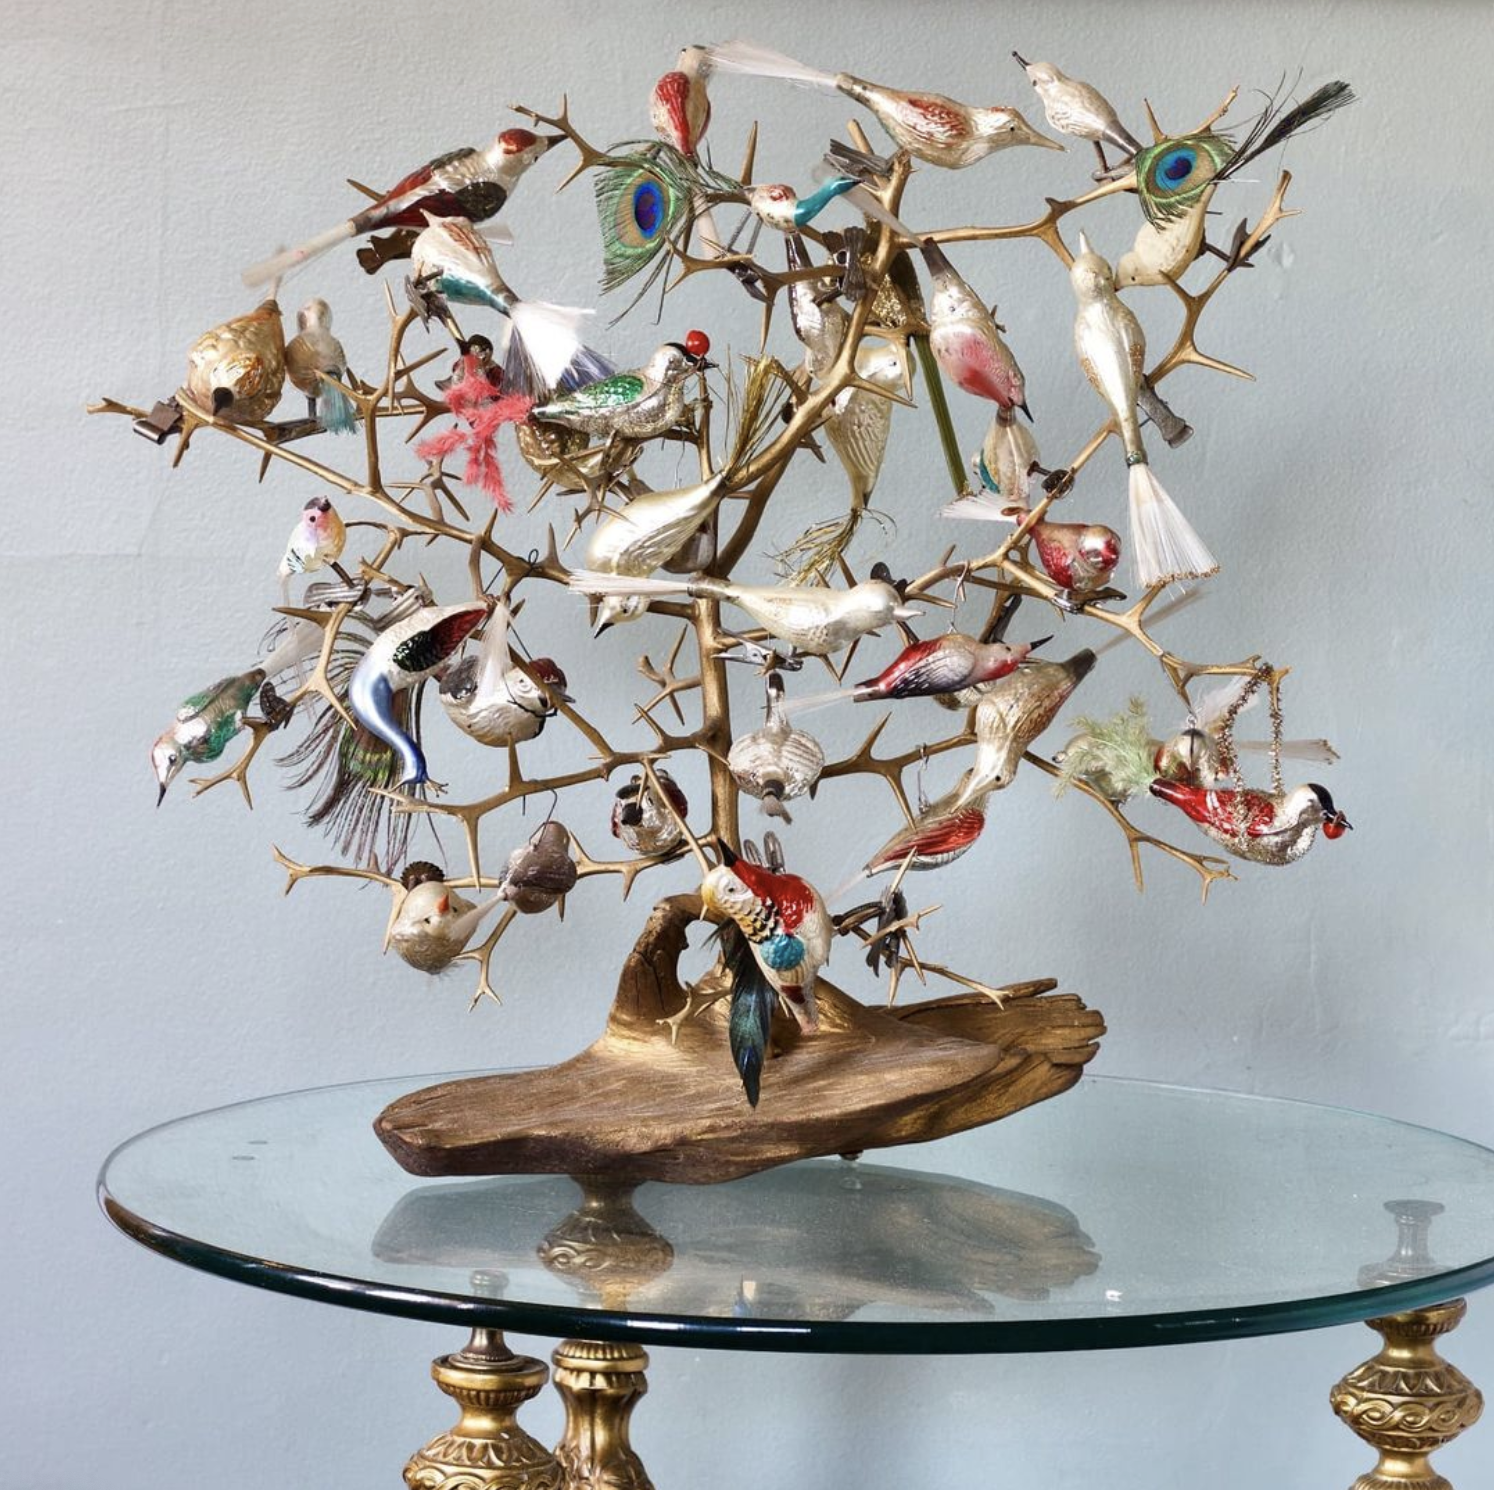 Vintage glass bird ornament collection kellyelko.com